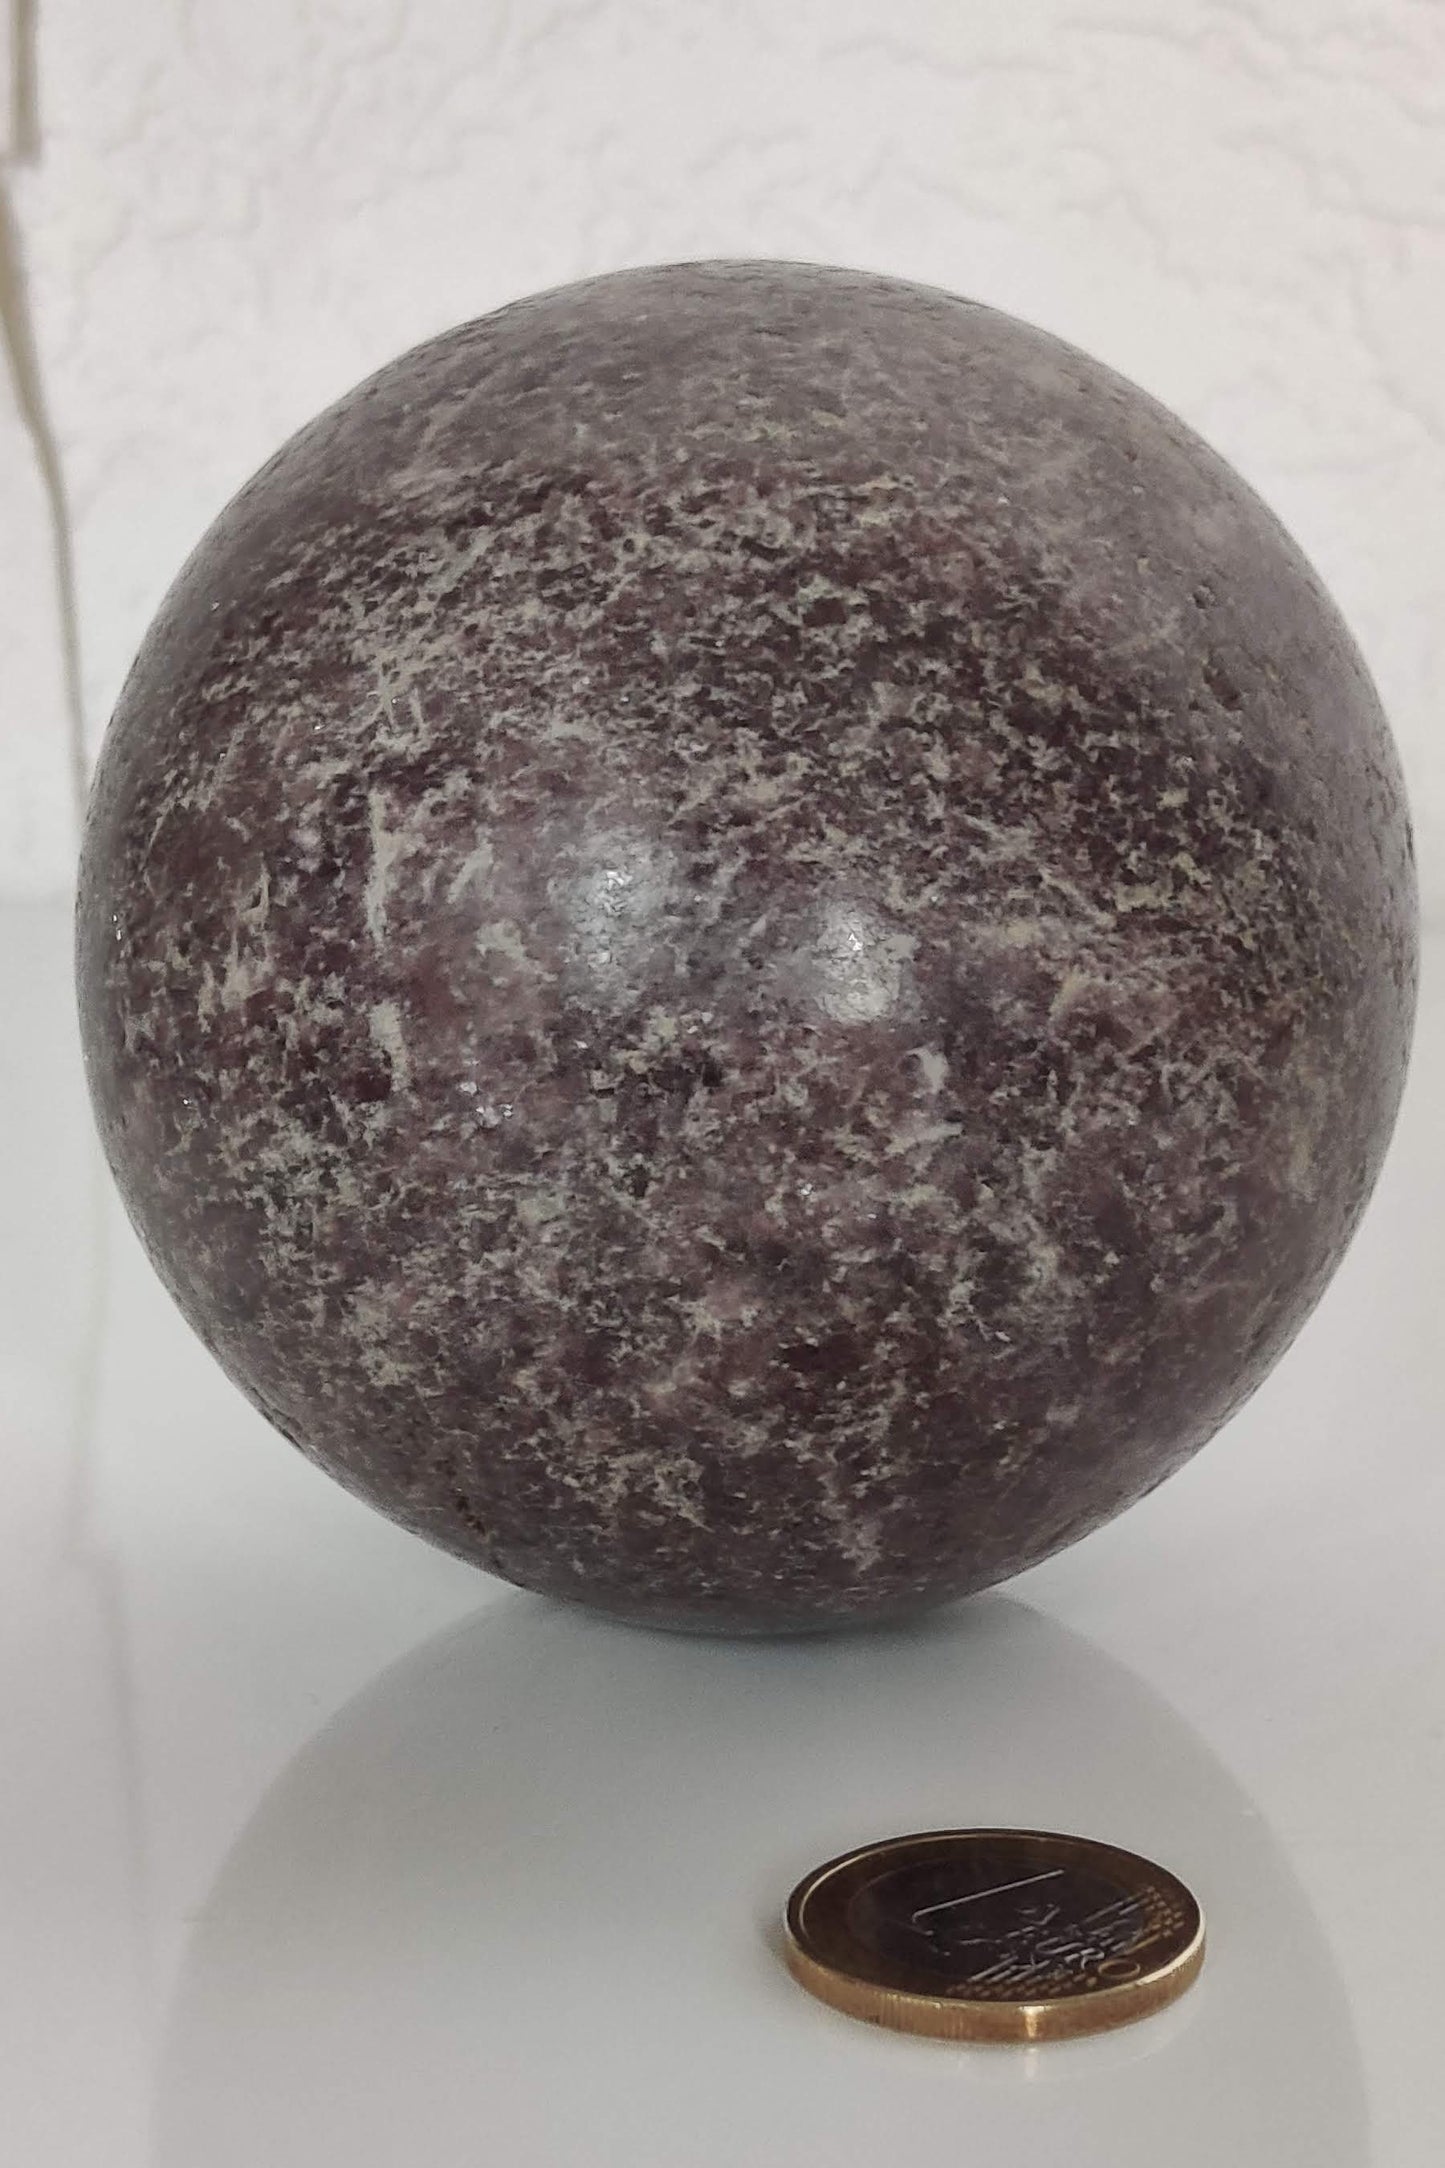 Large Brazilian Lepidolite Sphere - 3.26", 28.6oz: The Serene Purple Powerhouse Crystal Sphere